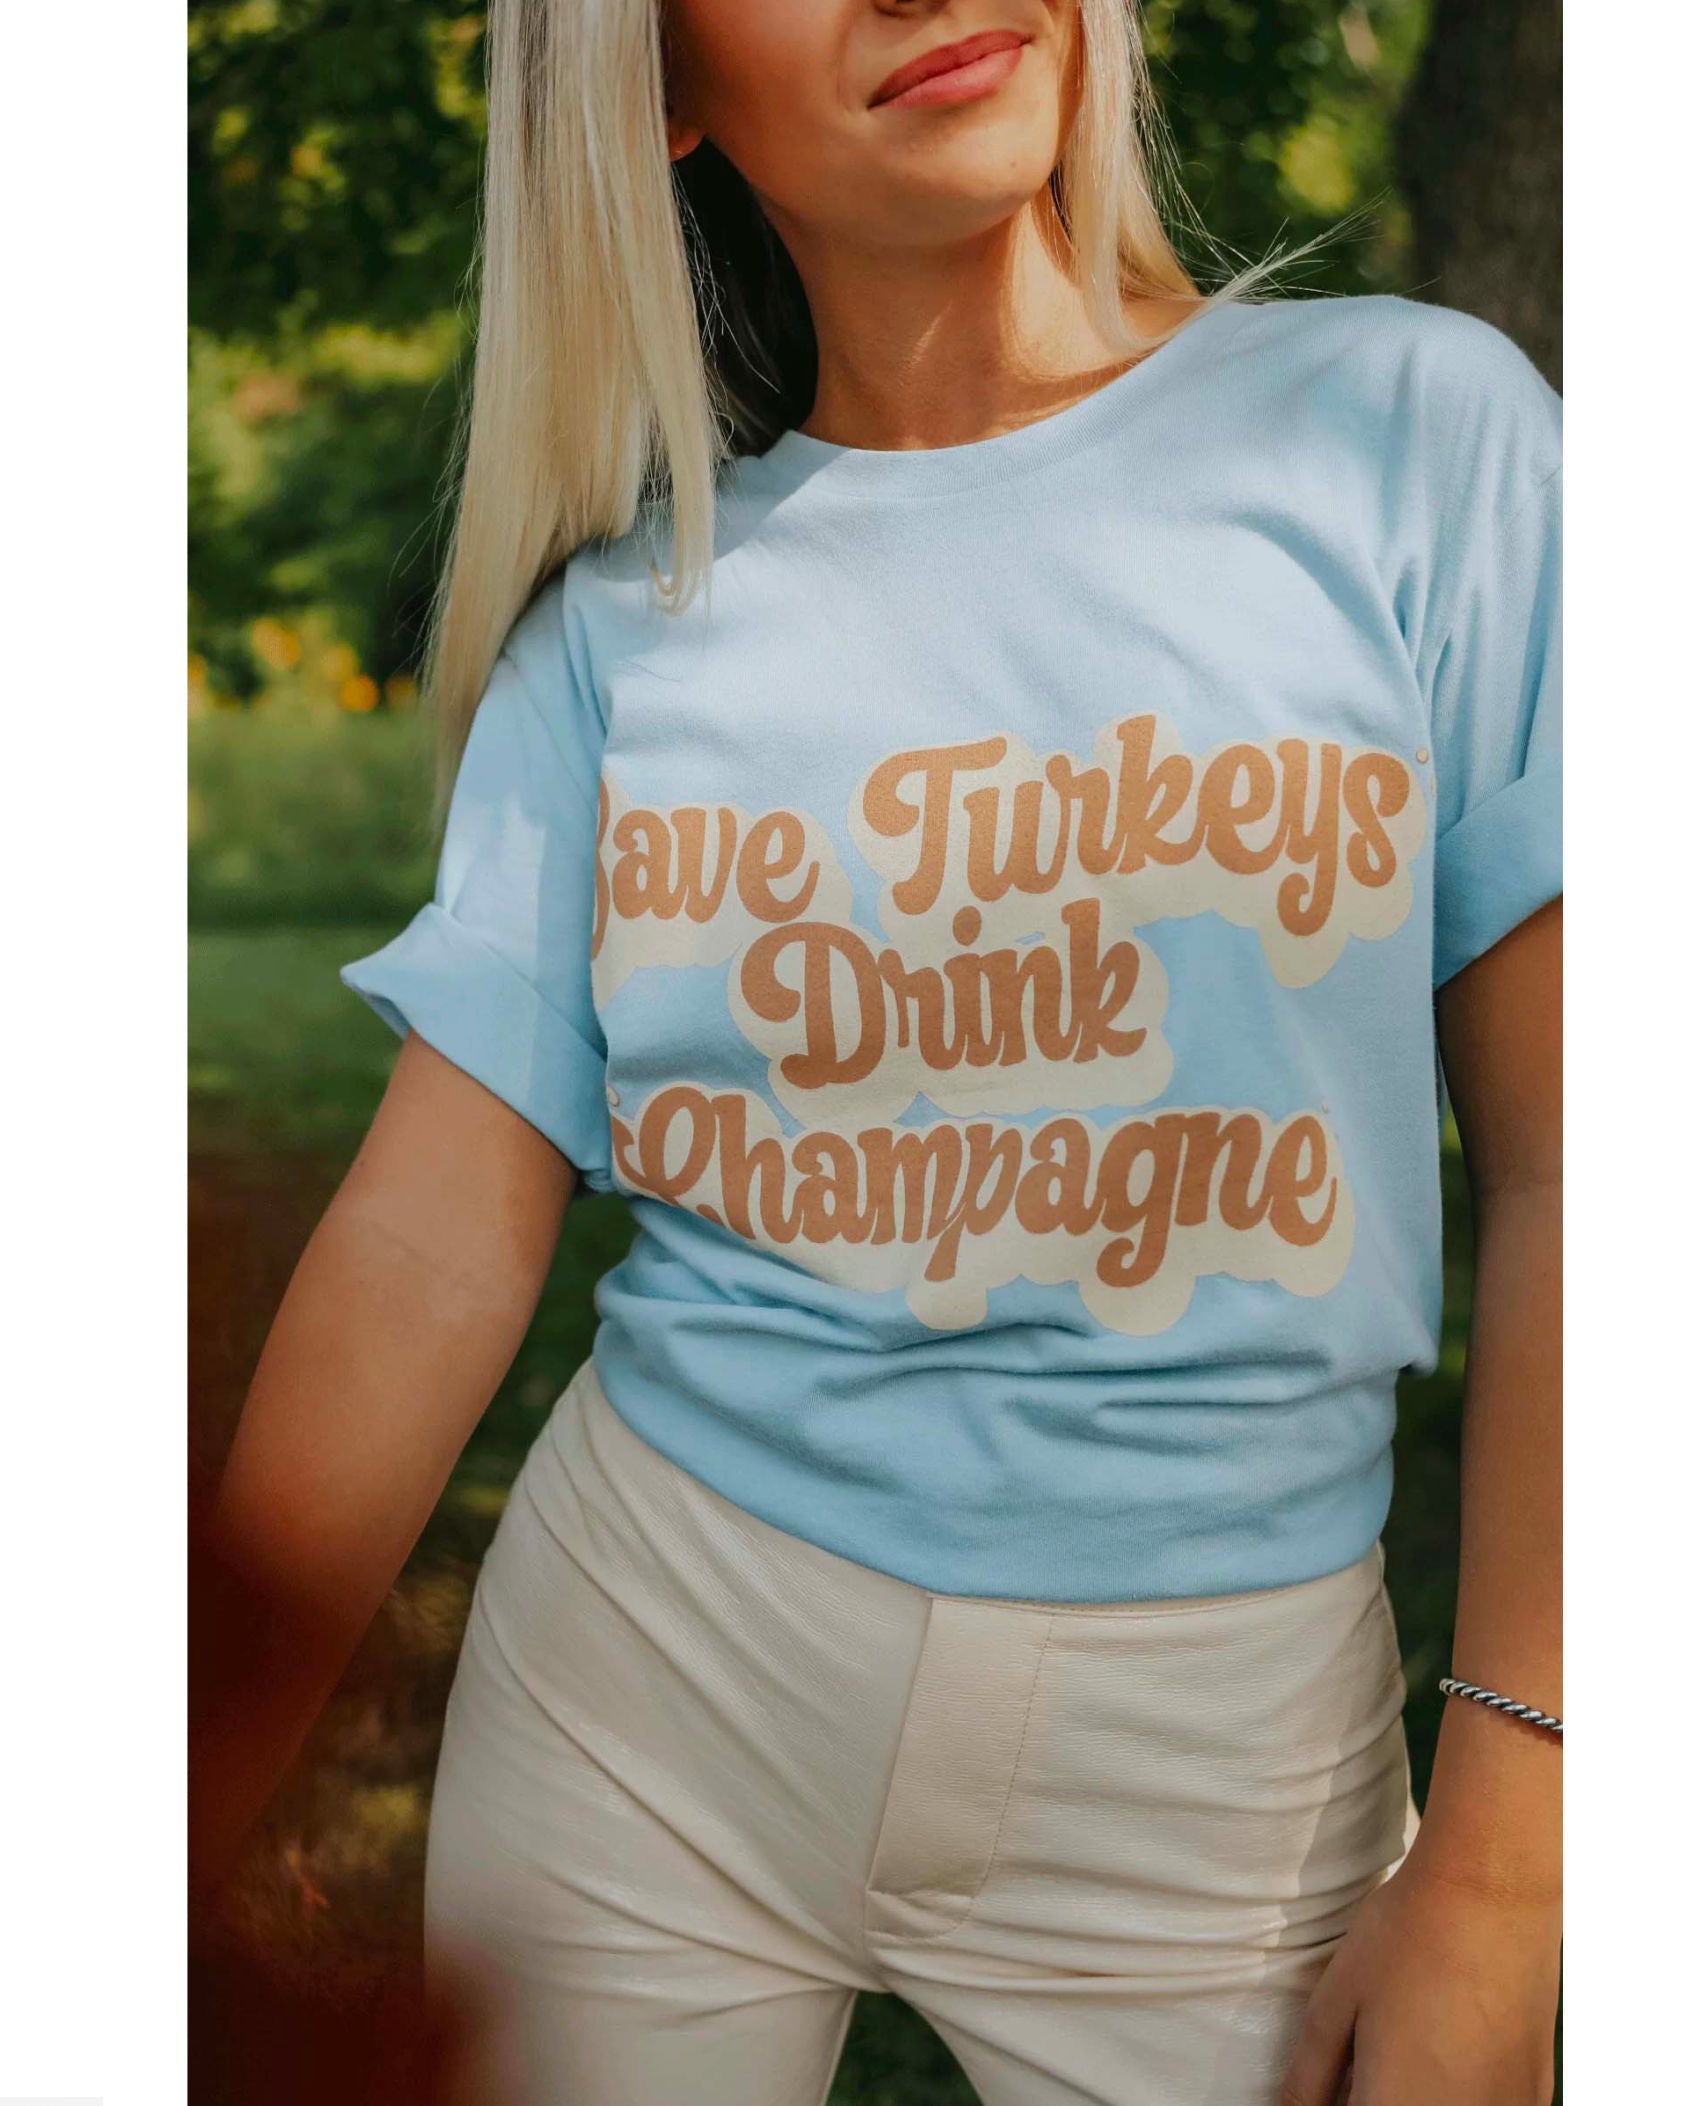 Save Turkeys Drink Champagne TShirt